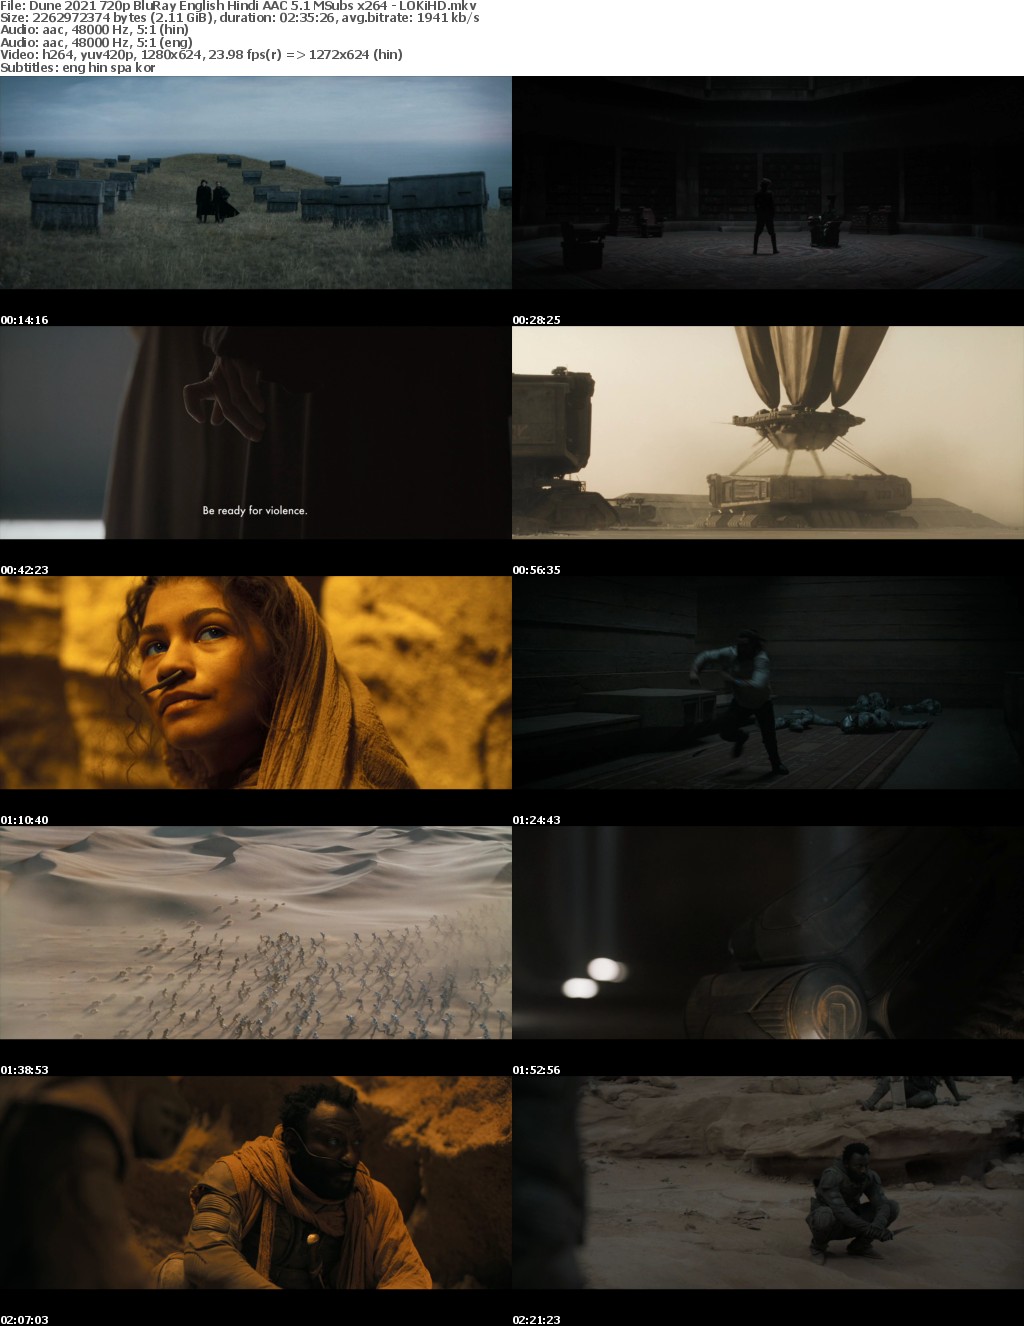 Dune 2021 720p BluRay English Hindi AAC 5 1 MSubs x264 - LOKiHD mkv